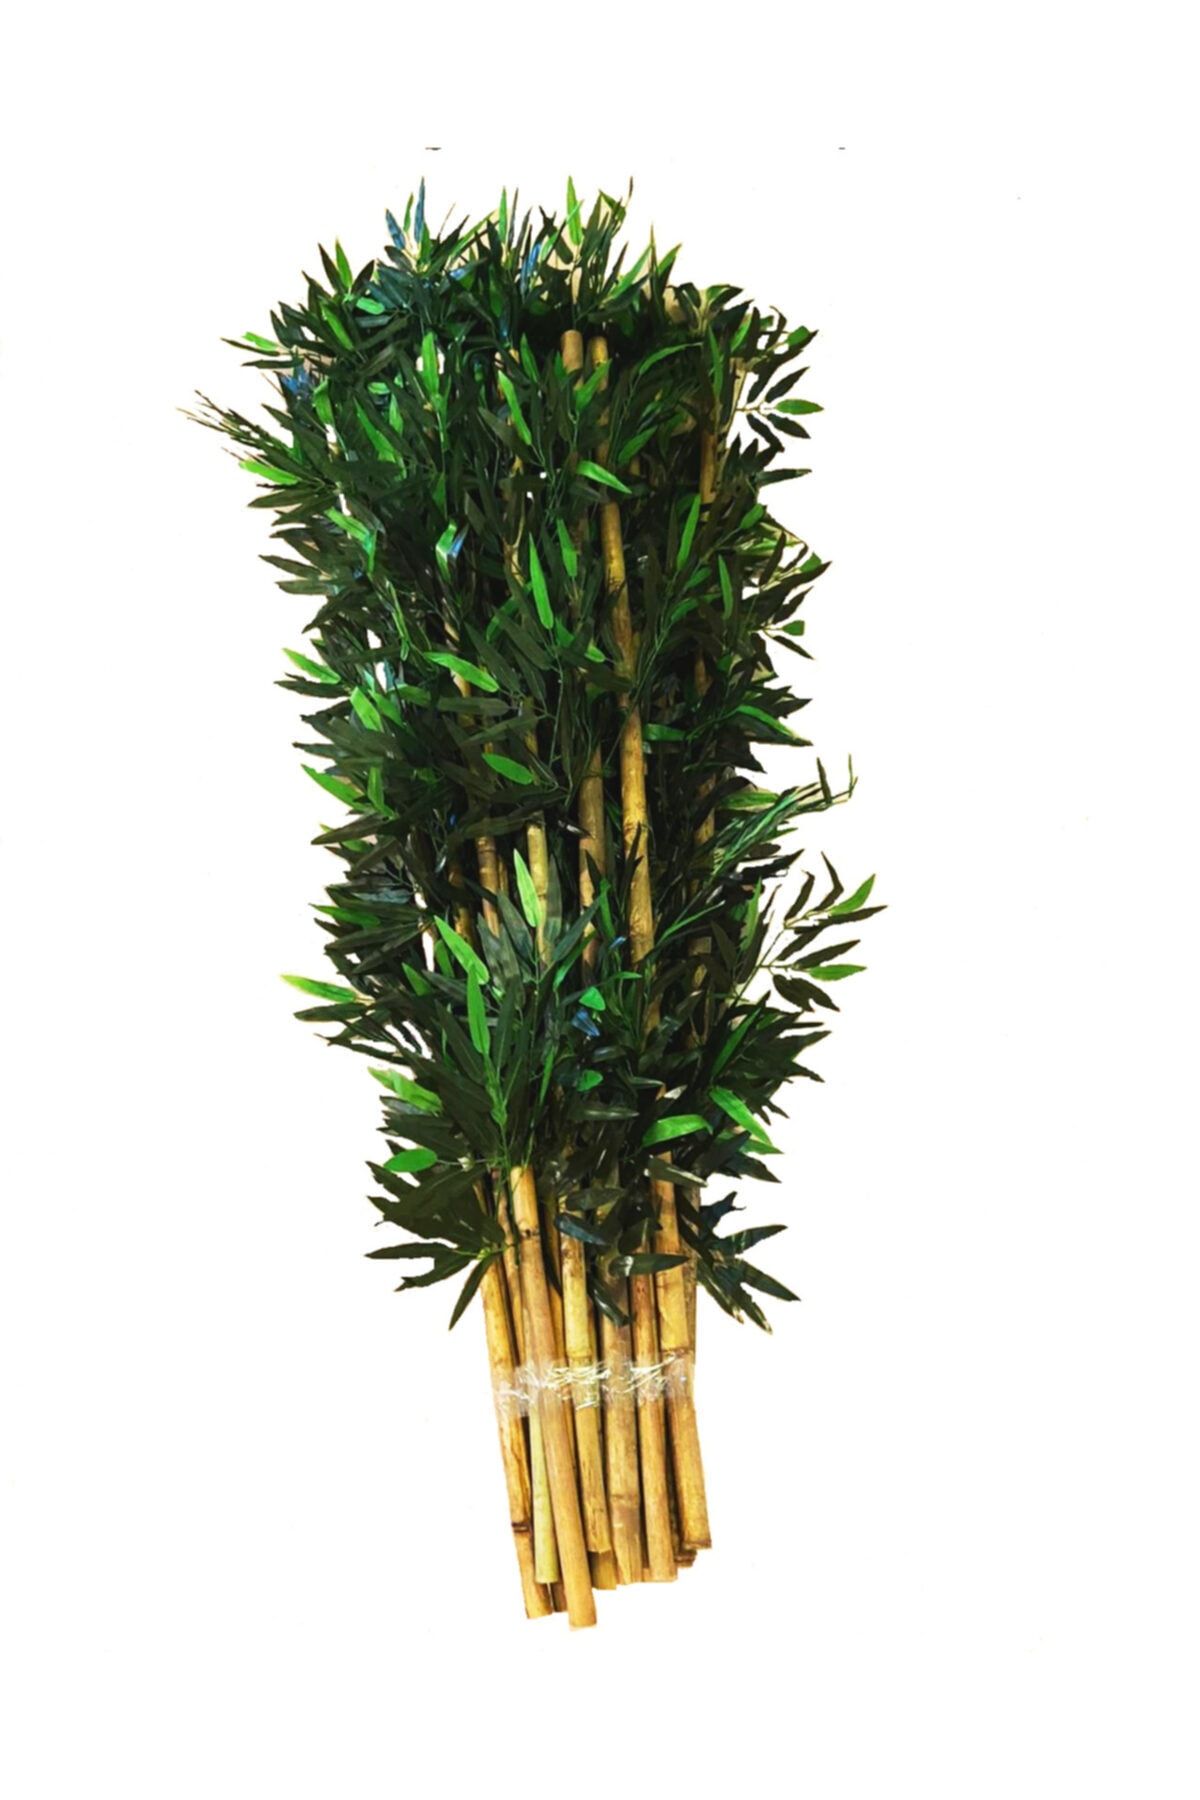 Bambu 5 Adet Çubuk Yapay Ağaç Çubukları Bahçe Balkon Ev Dekor Bitki Ağaç Süs Gövde Botanik